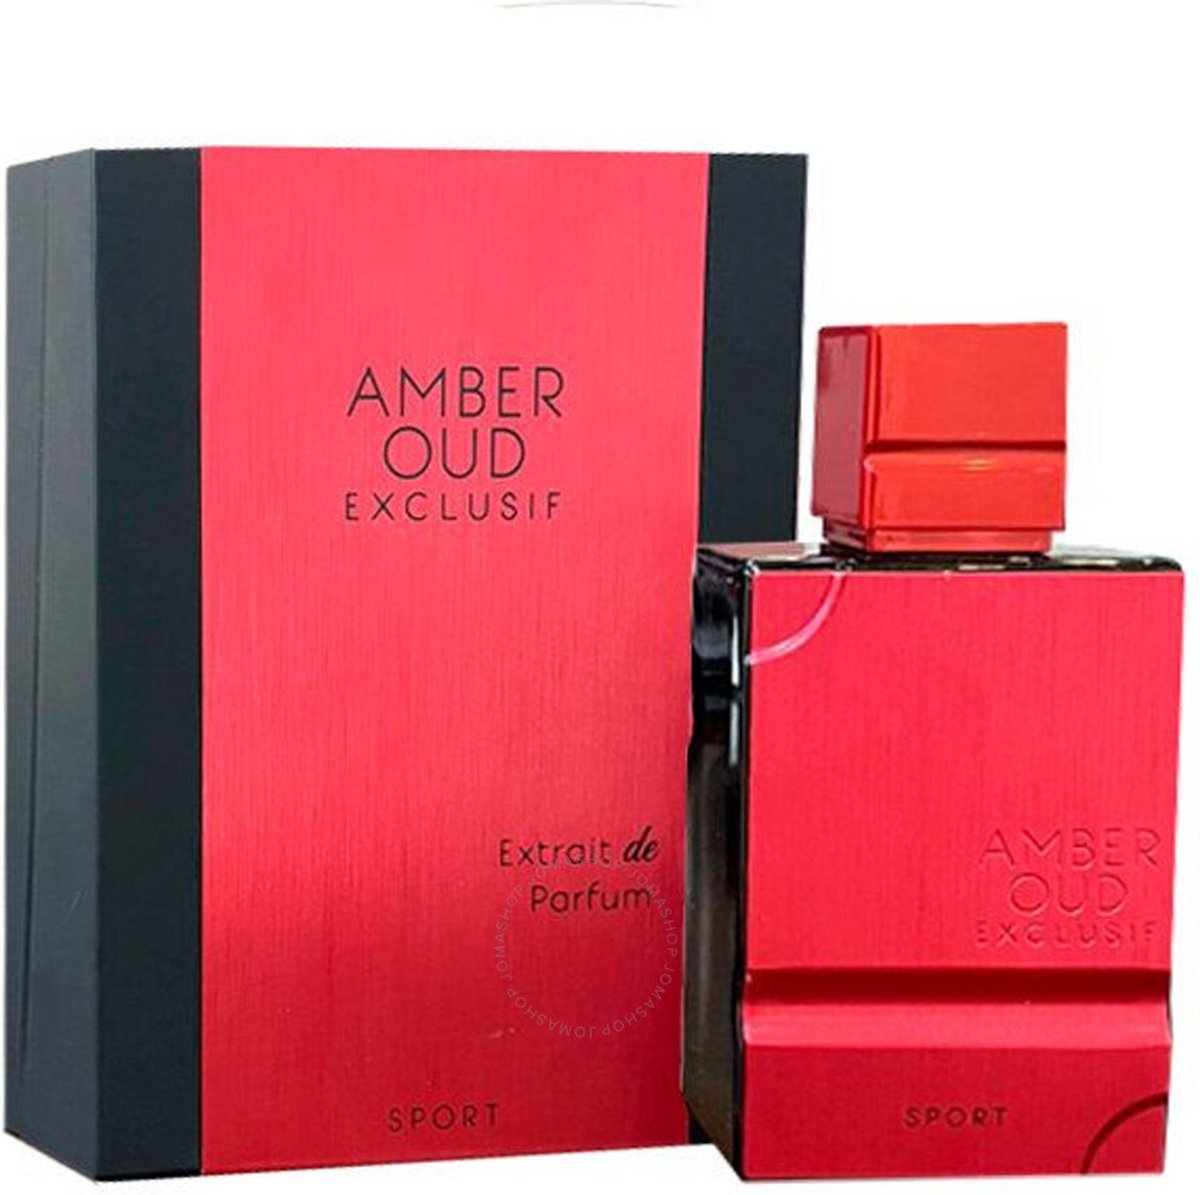 Al Haramain Amber Oud Exclusif Sport eau de parfum spray (unisex) 60 ml